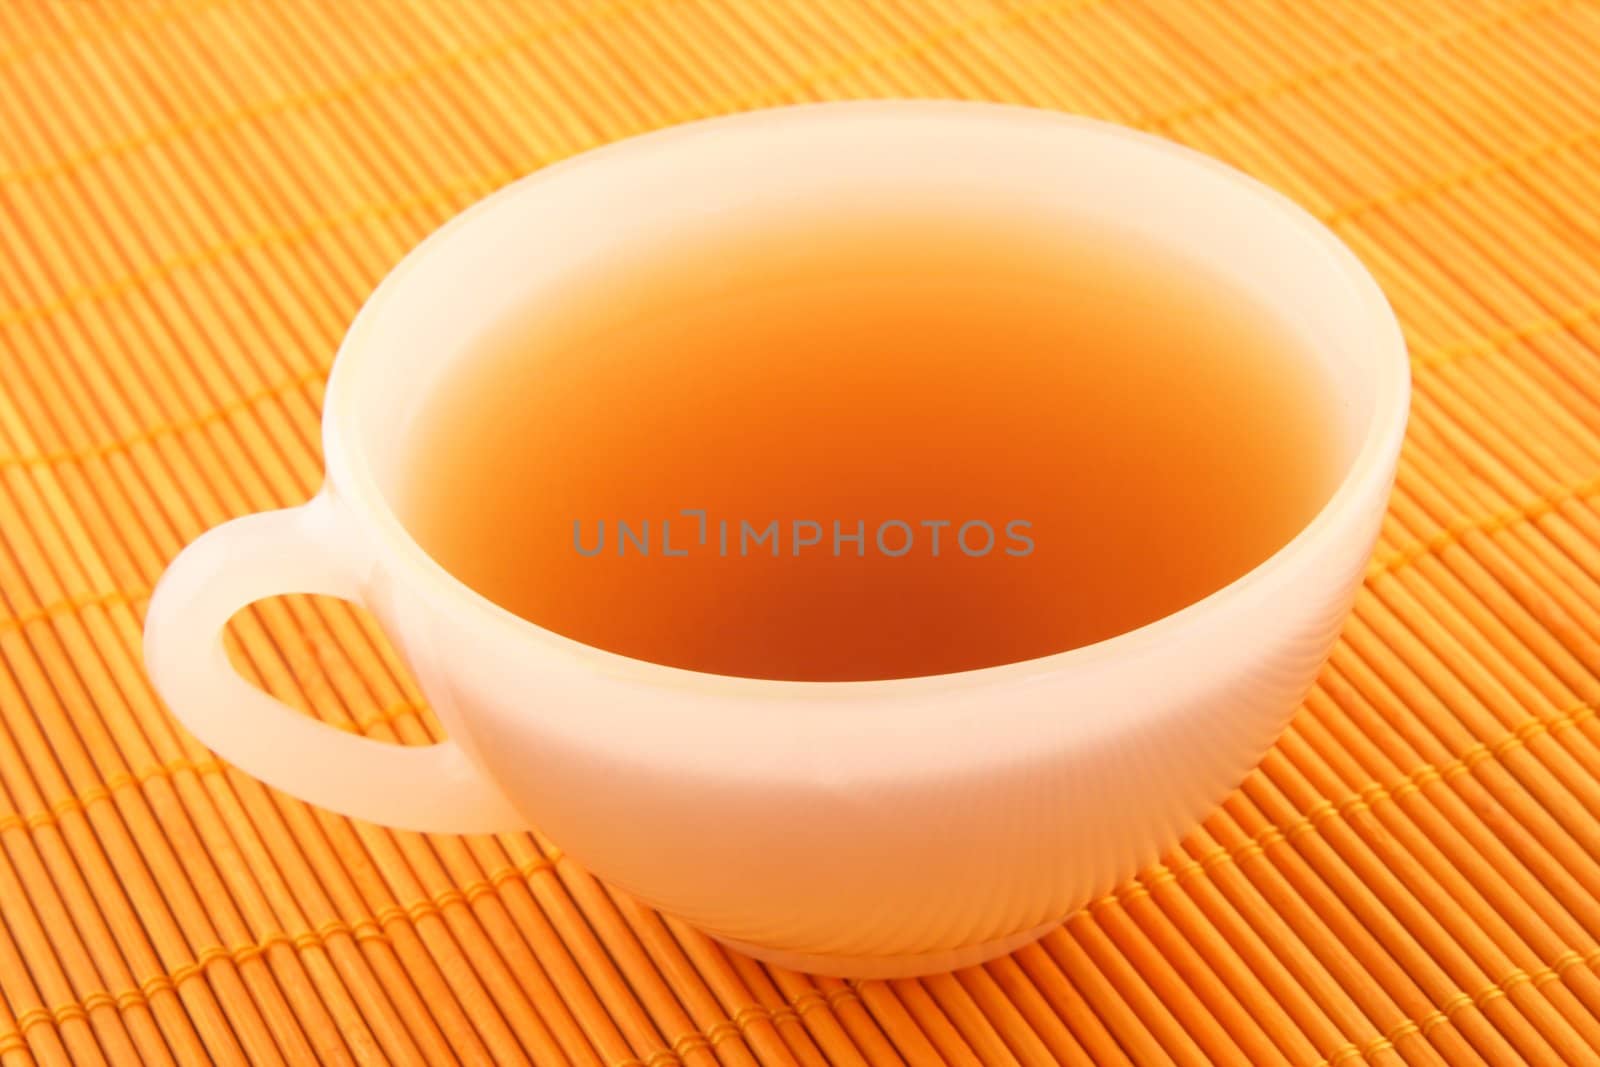 Cup of tea on a rattan mat in warm golden light.